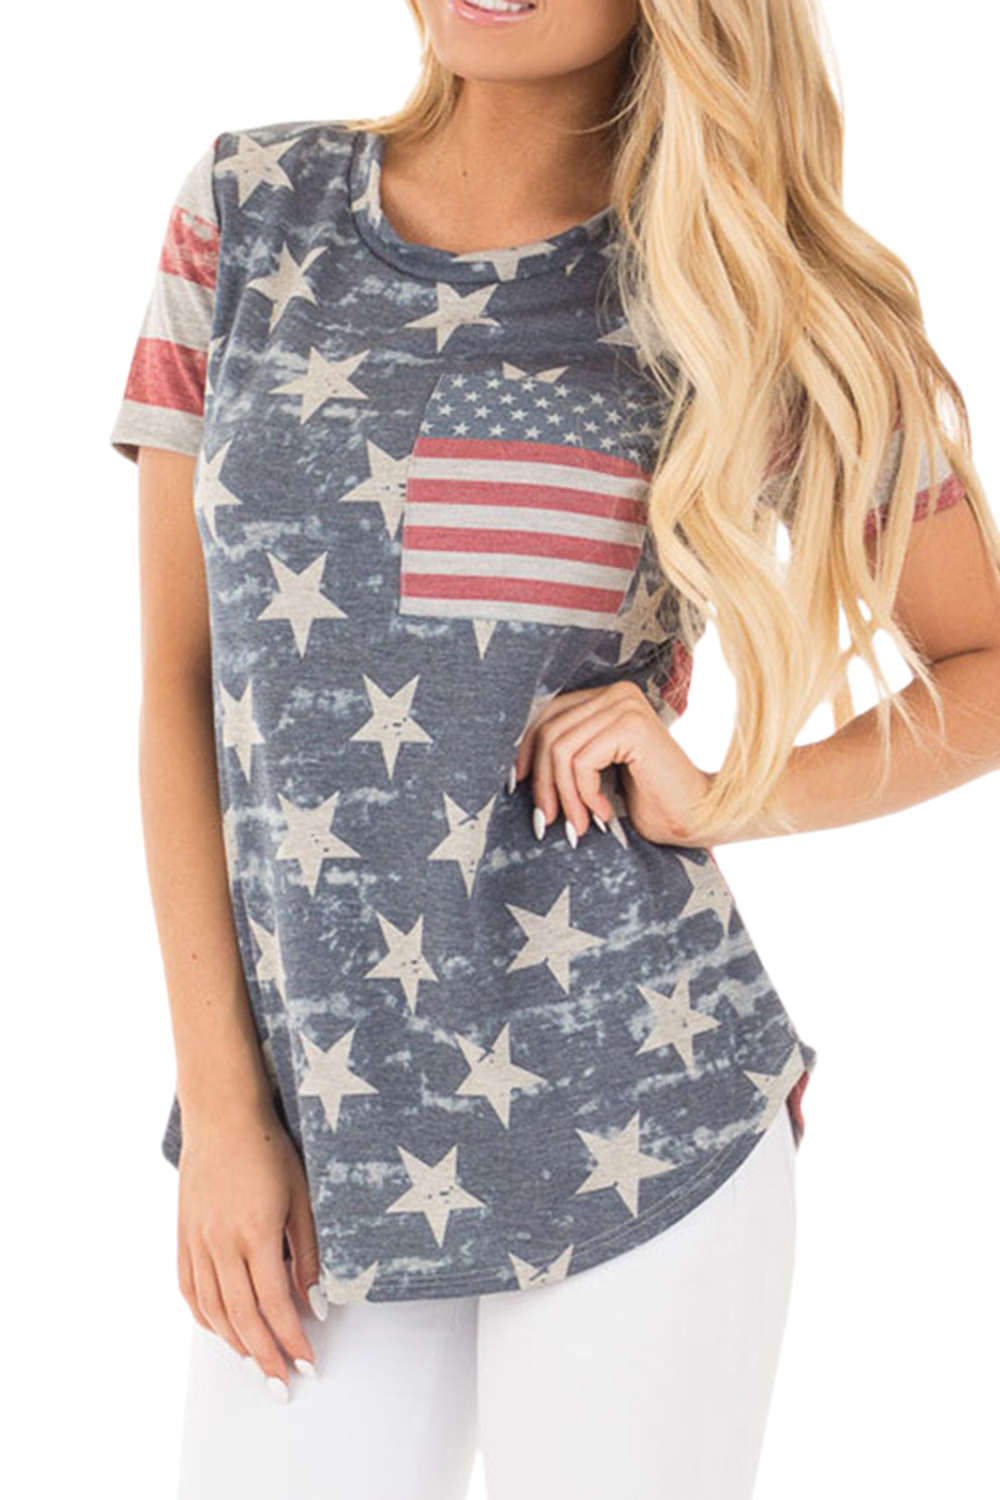 Iyasson American Flag Digital Printing T-shirt